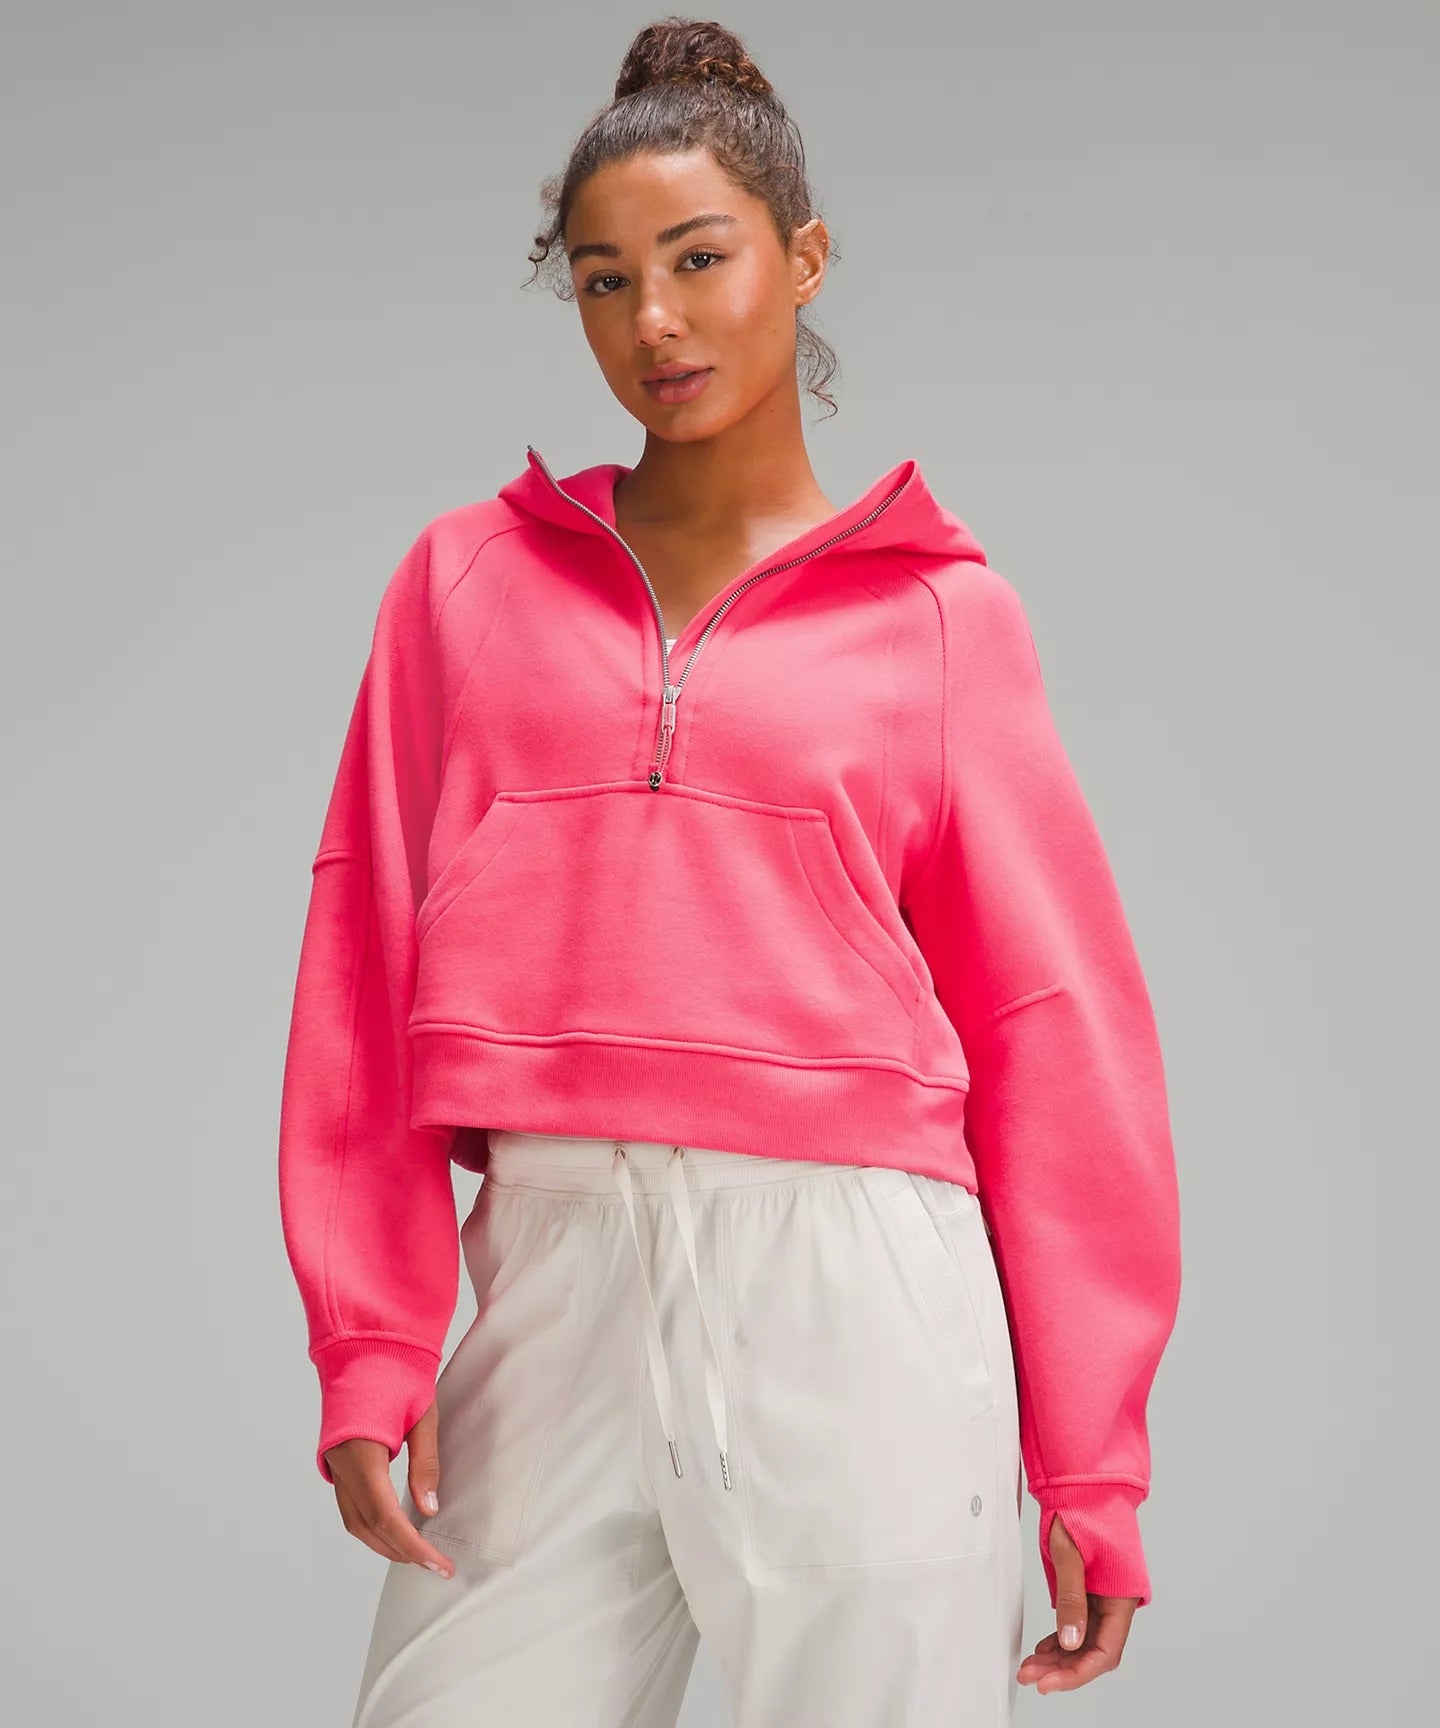 Model wearing a cropped pink hoodie